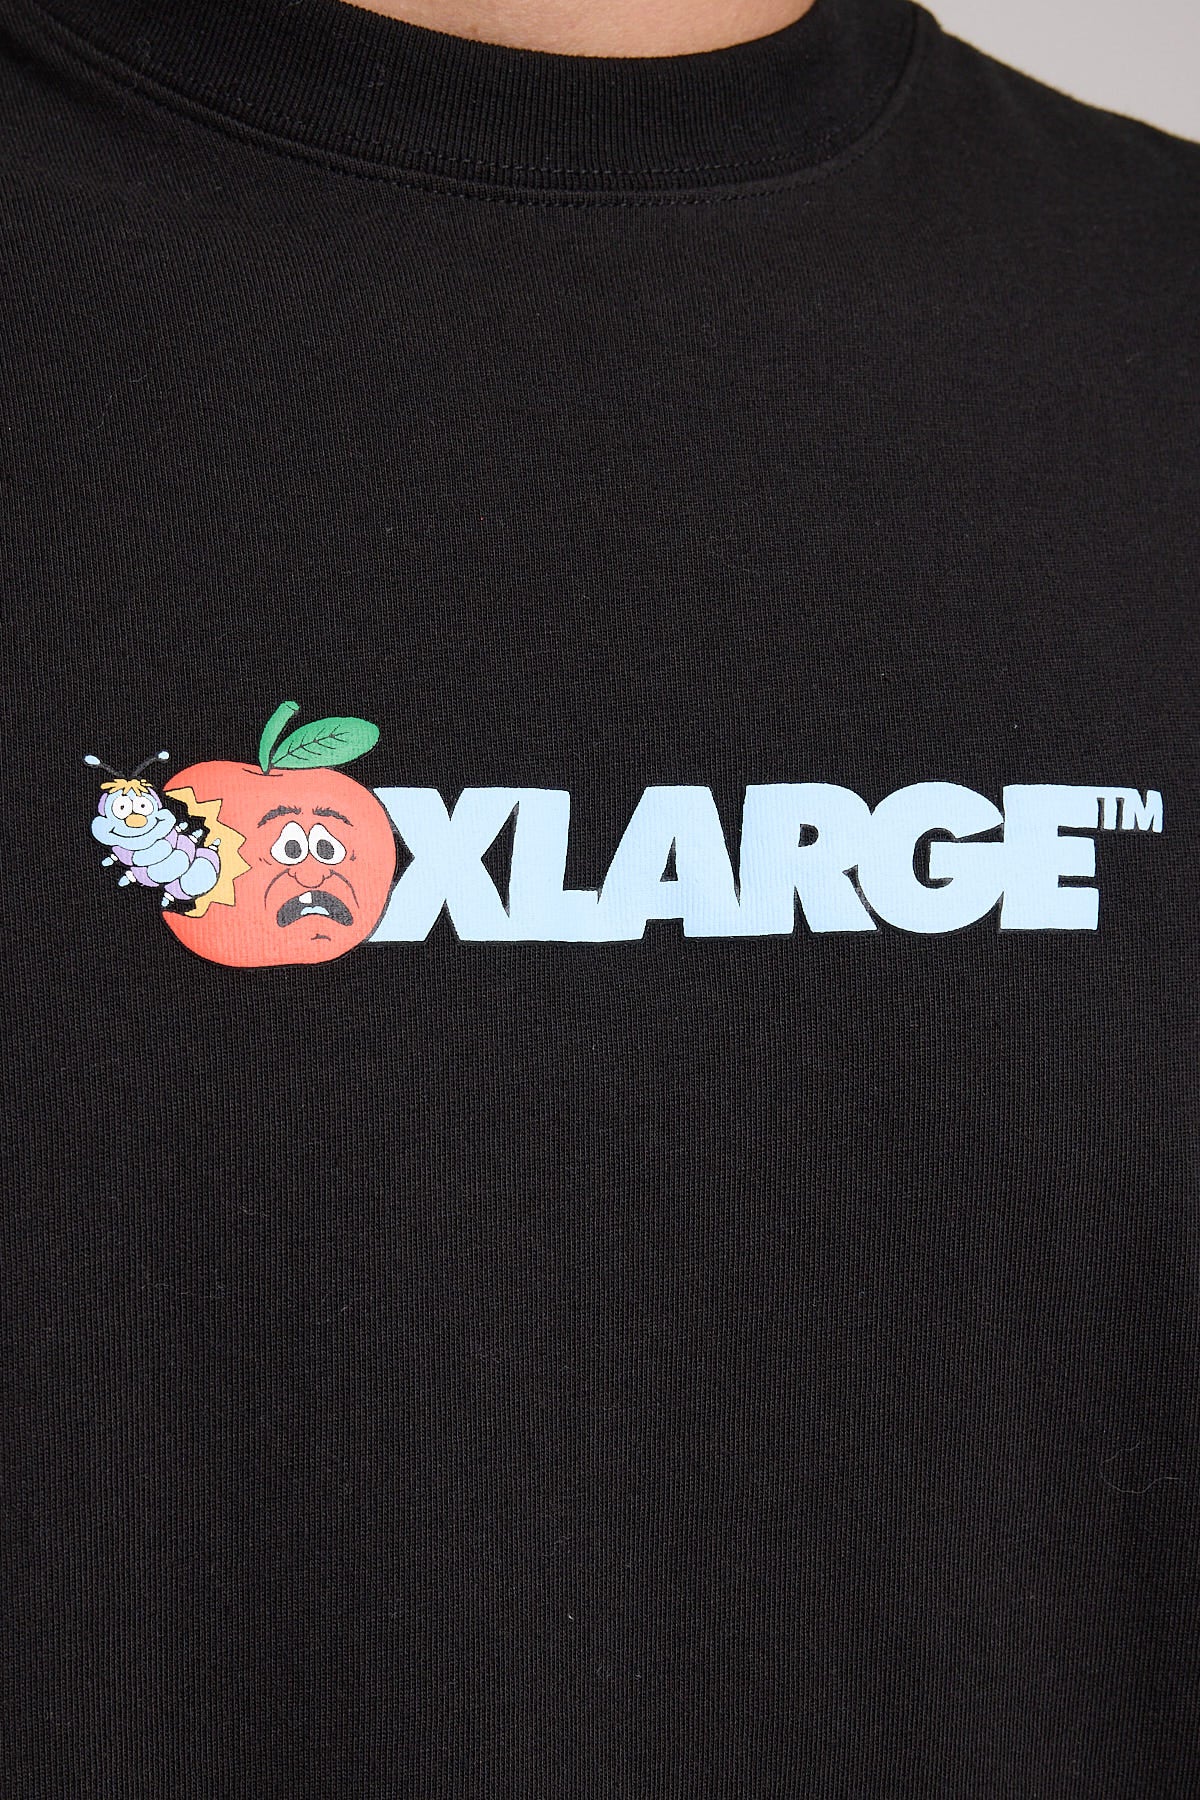 Xlarge Apples Boxy SS Tee Black Black